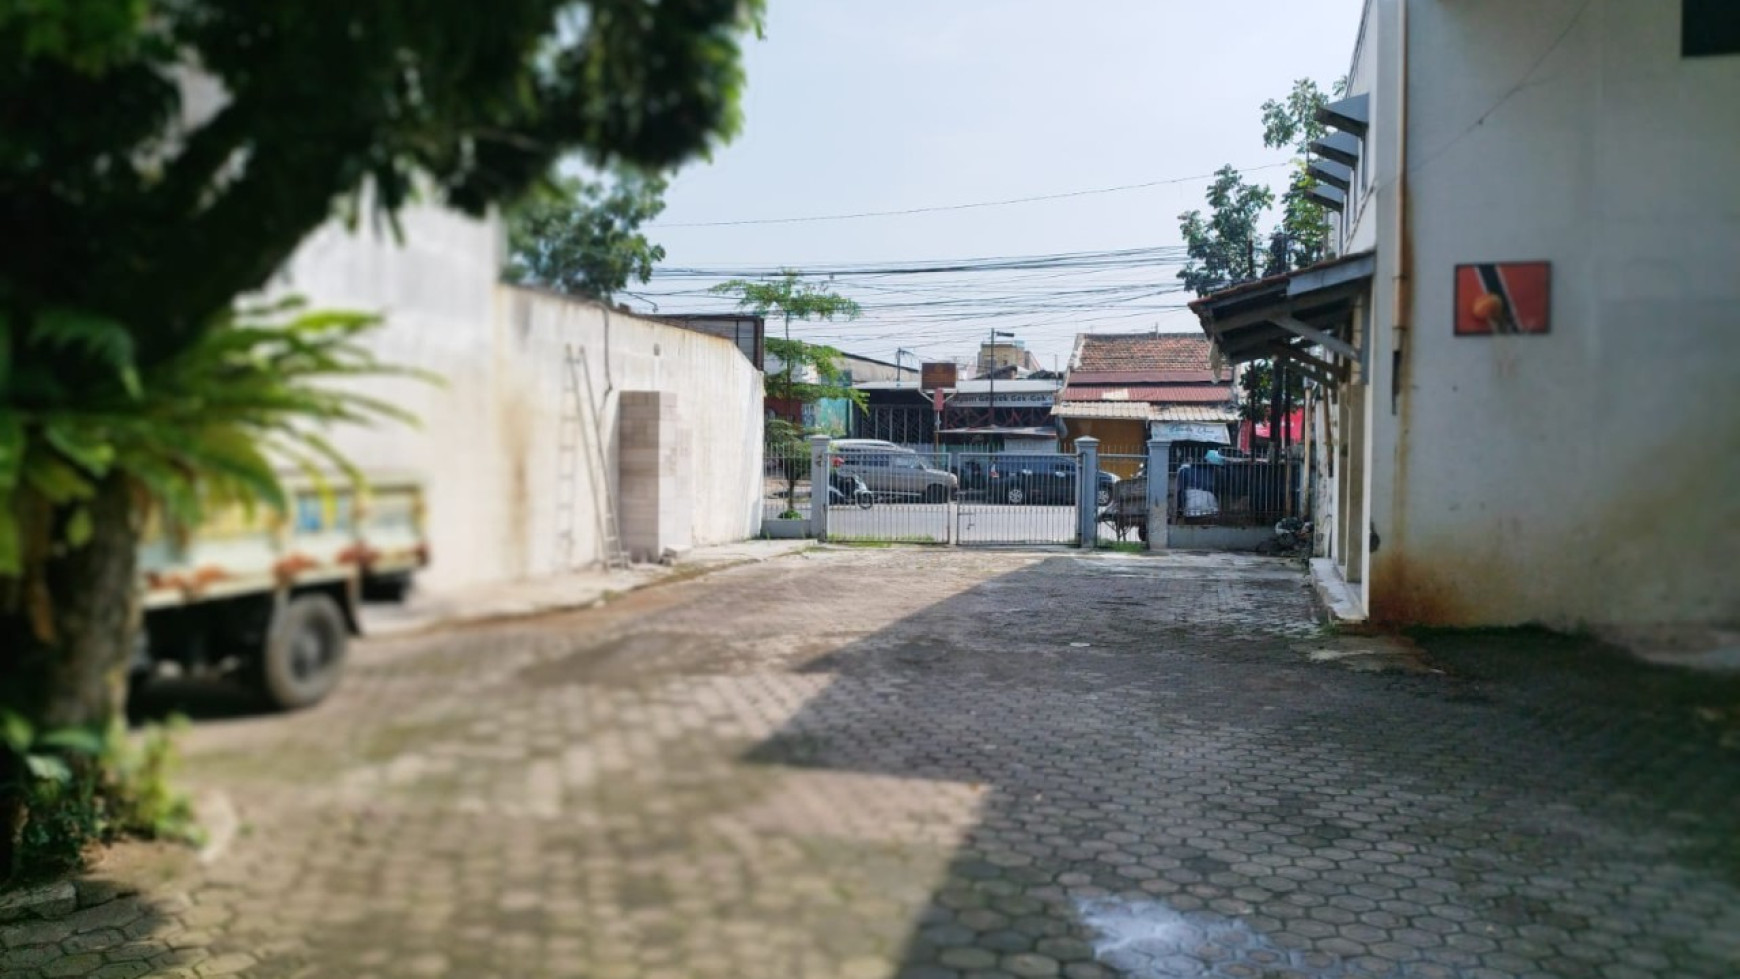 Rumah Sekaligus untuk Tempat Usaha Kost2an Jl Terusan Pasir Koja Bandung Luas 22x41m2